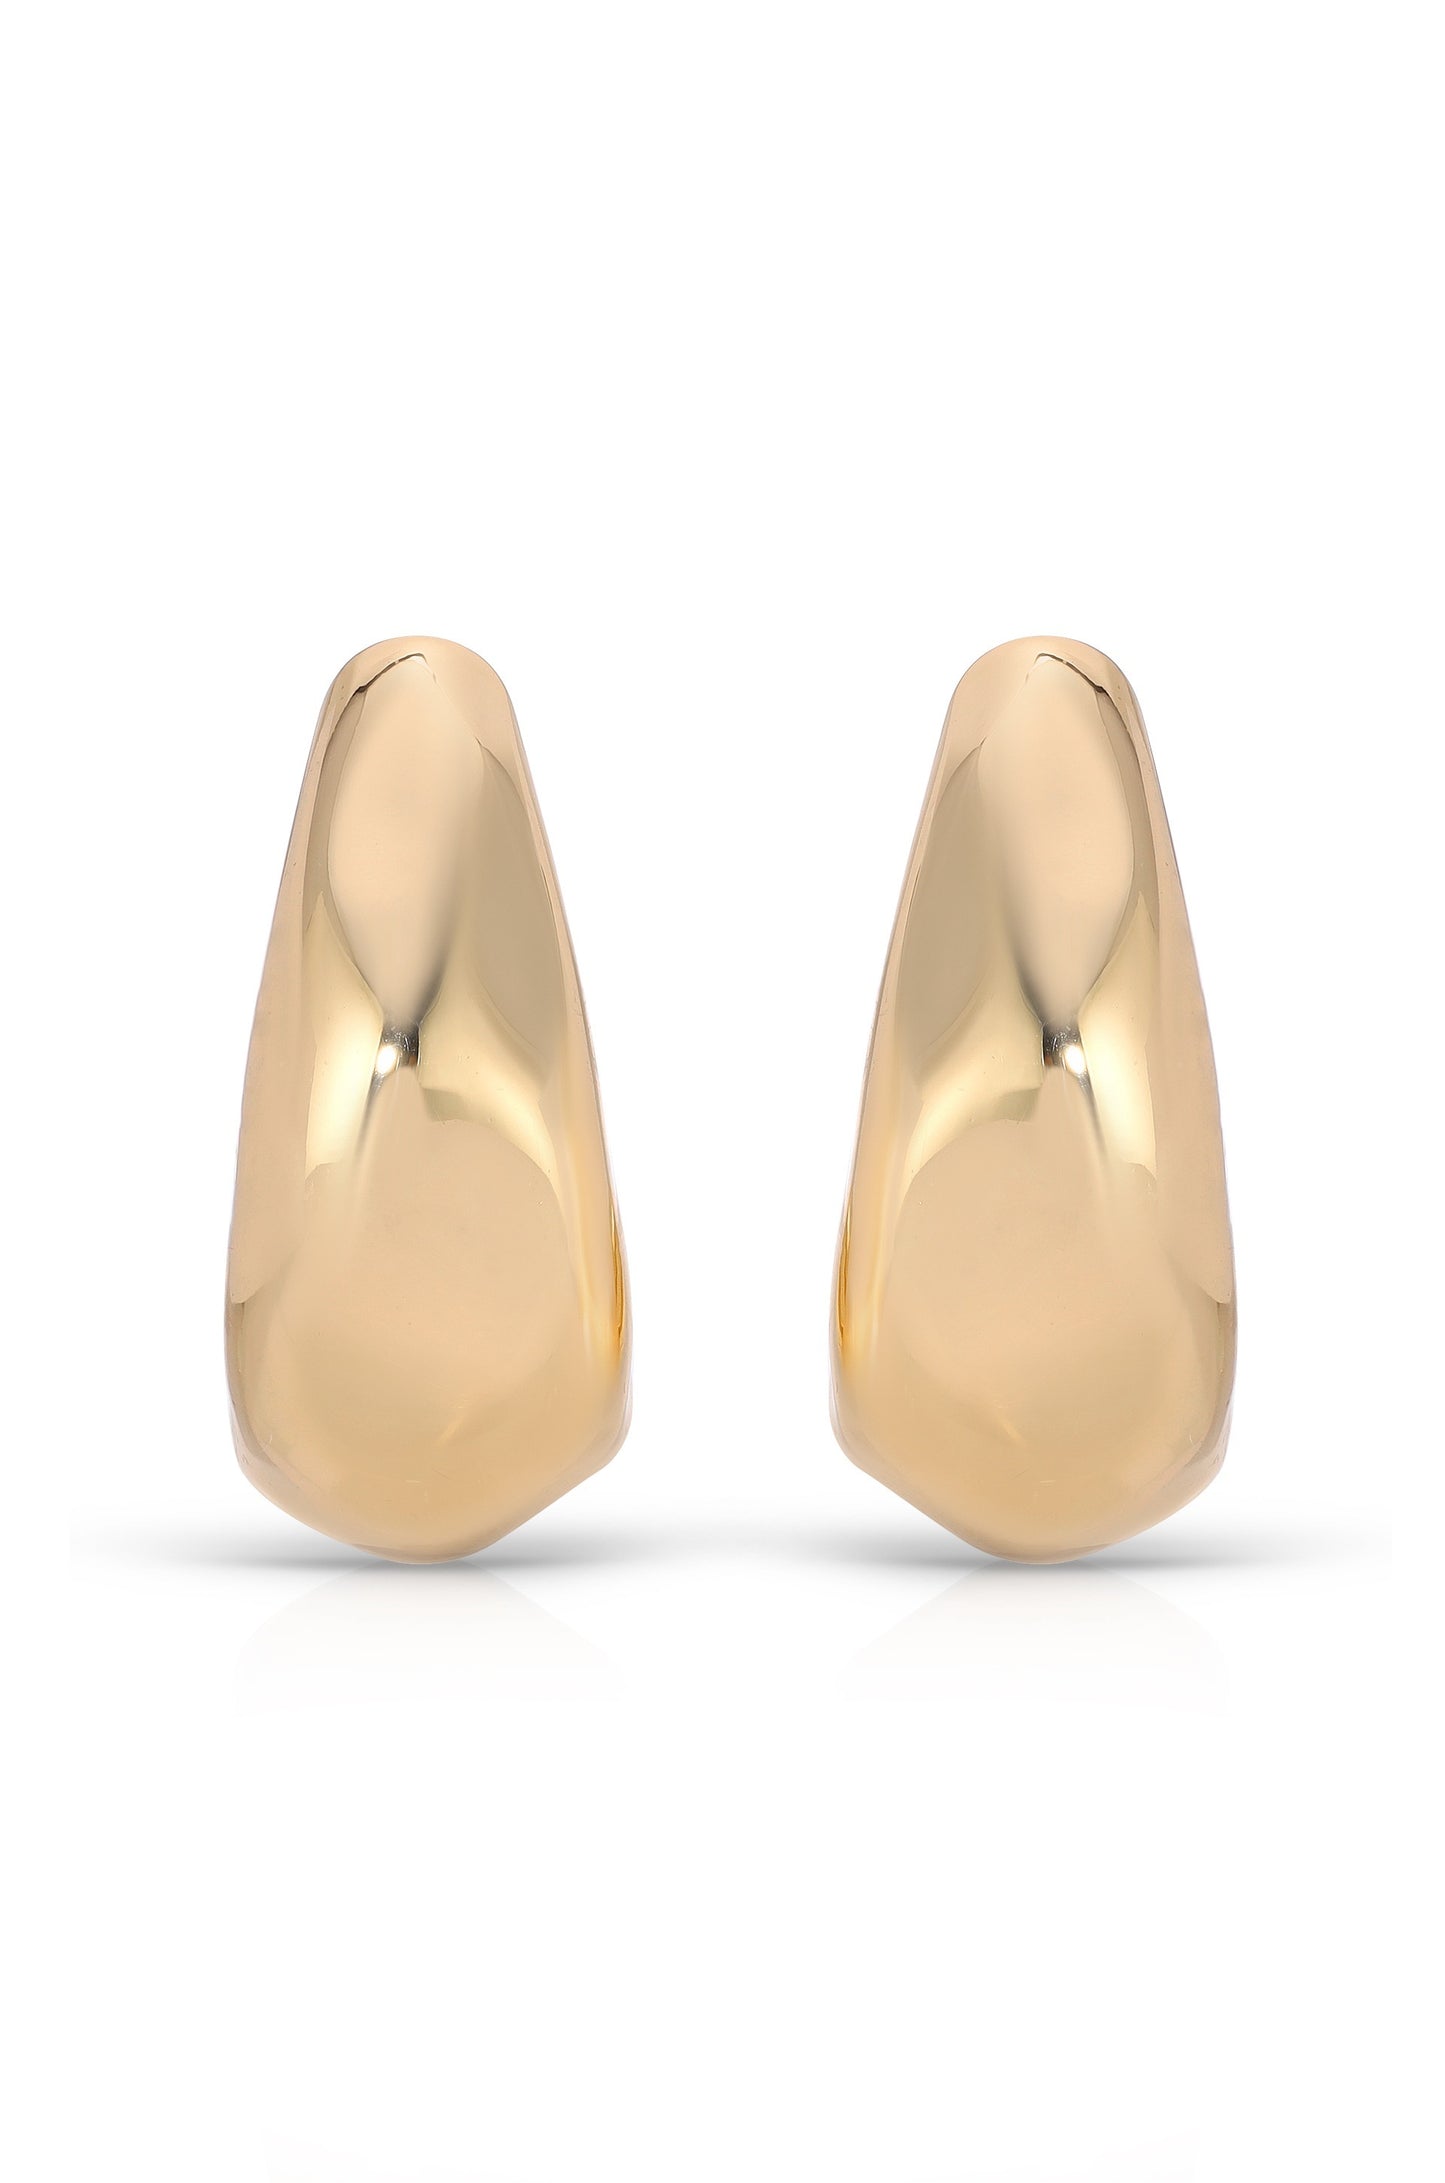 True Golden 18k Gold Plated Hoop Earrings front